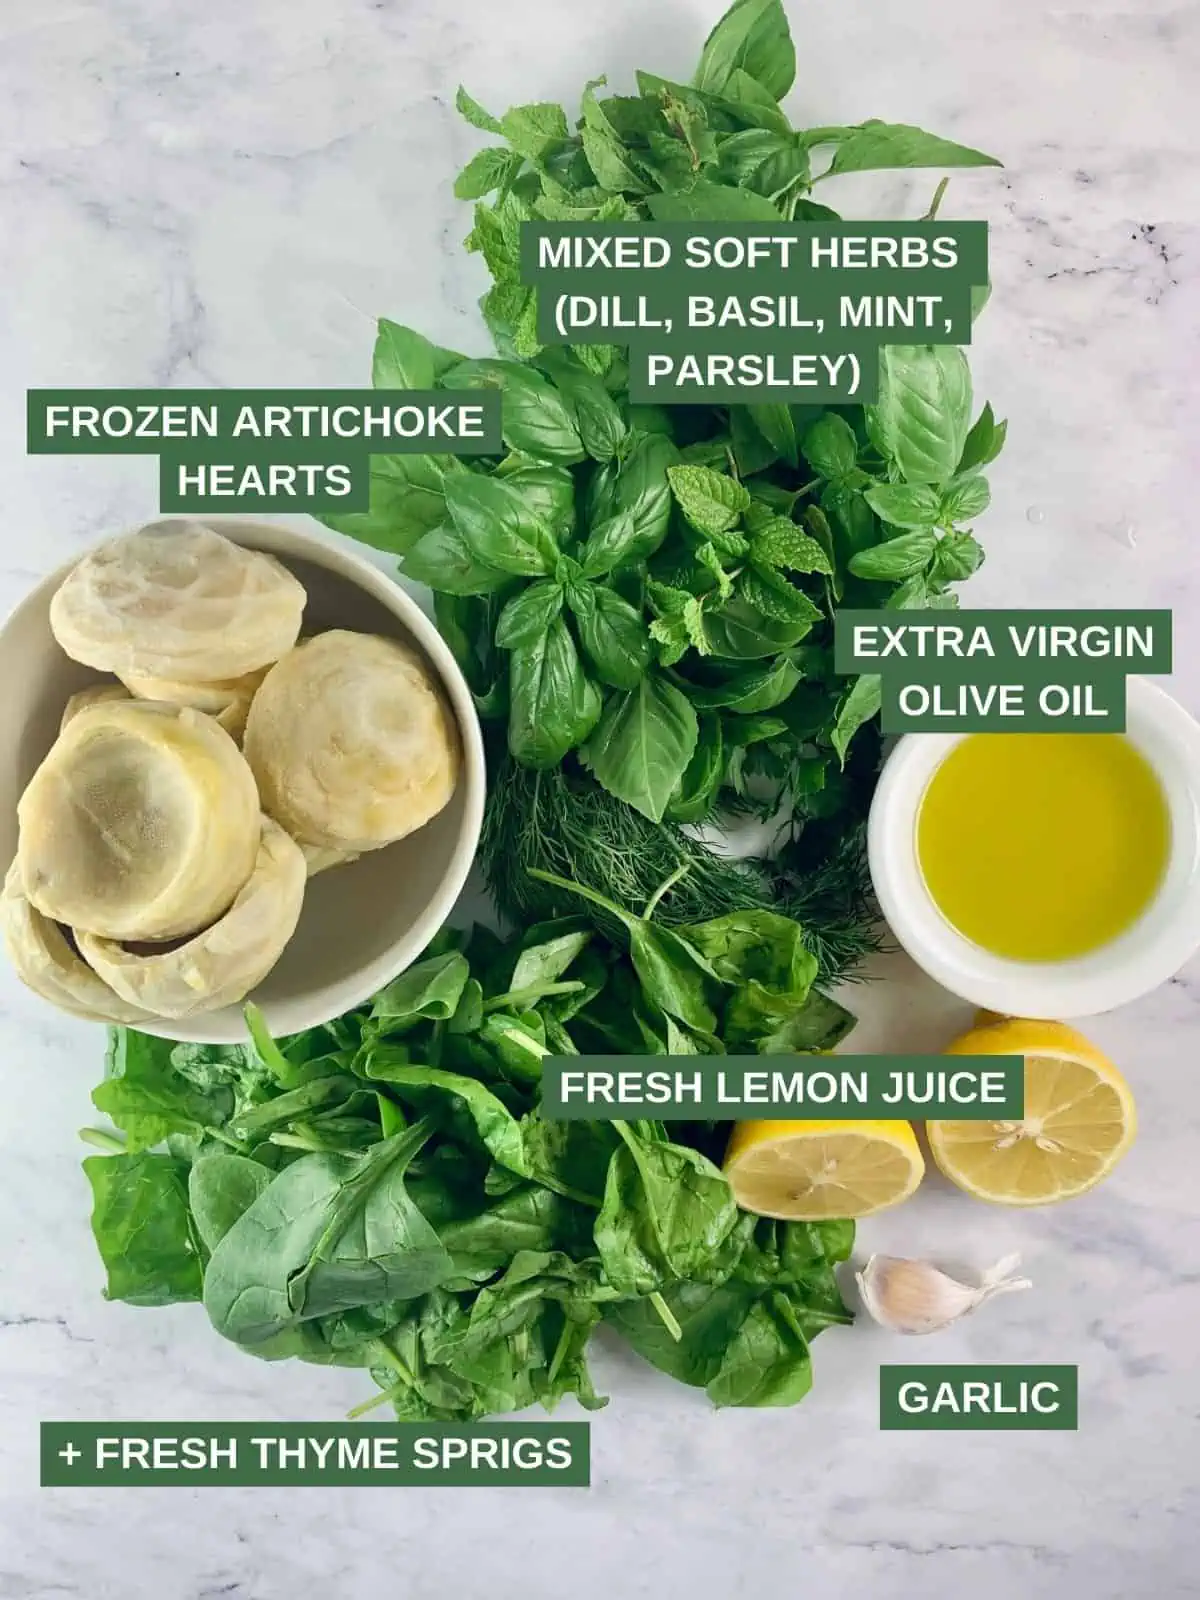 Labelled ingredients needed to make frozen artichoke hearts.